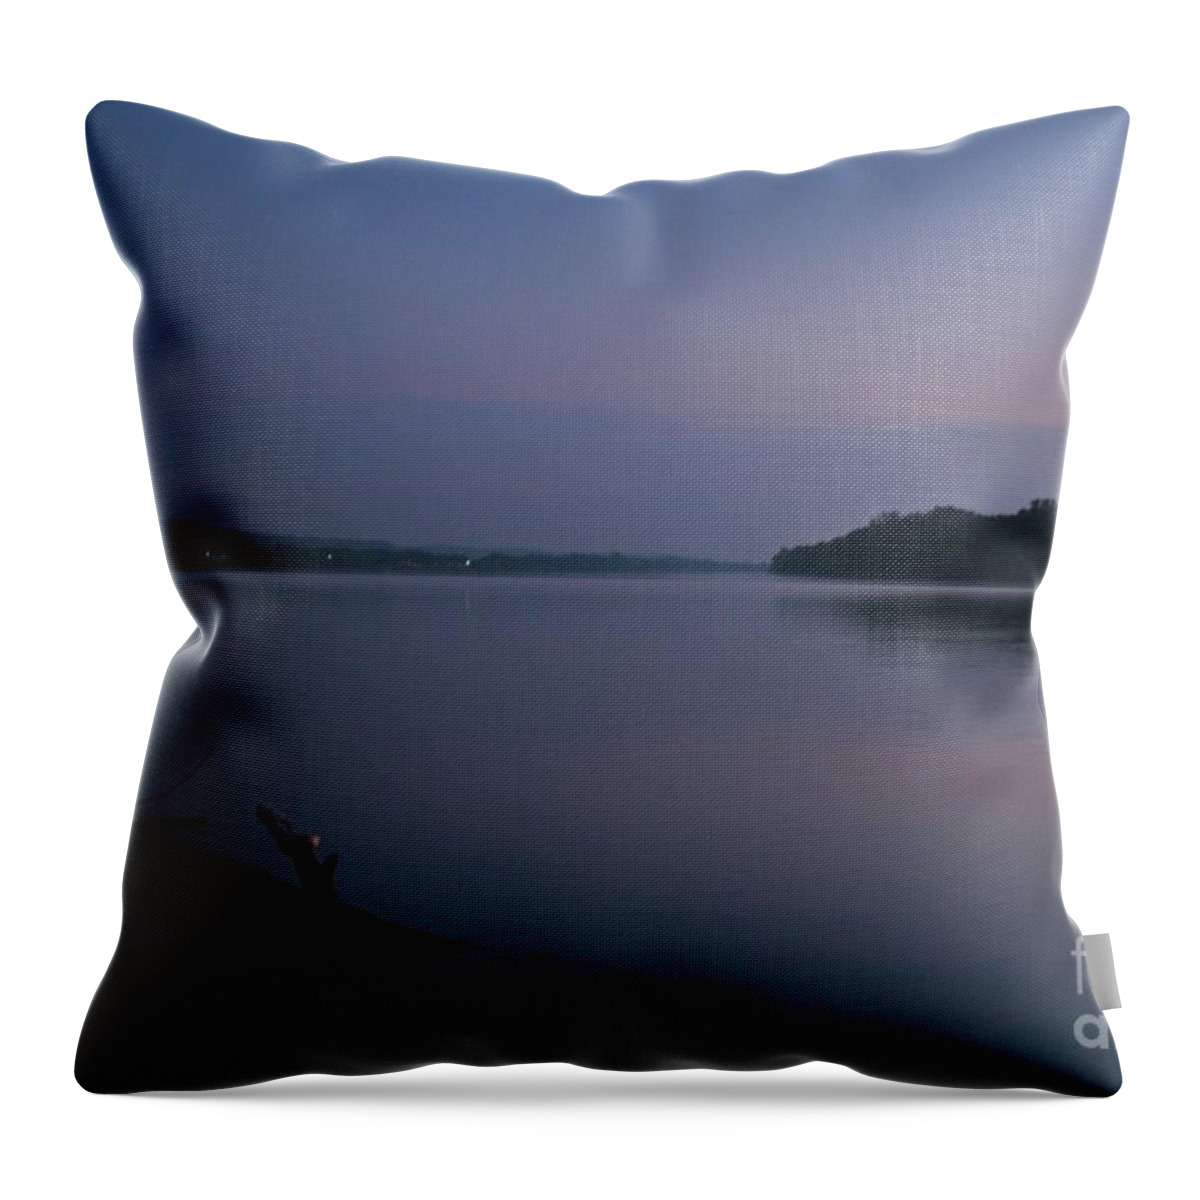 River Throw Pillow featuring the photograph Midnite Blue by Melissa Mim Rieman